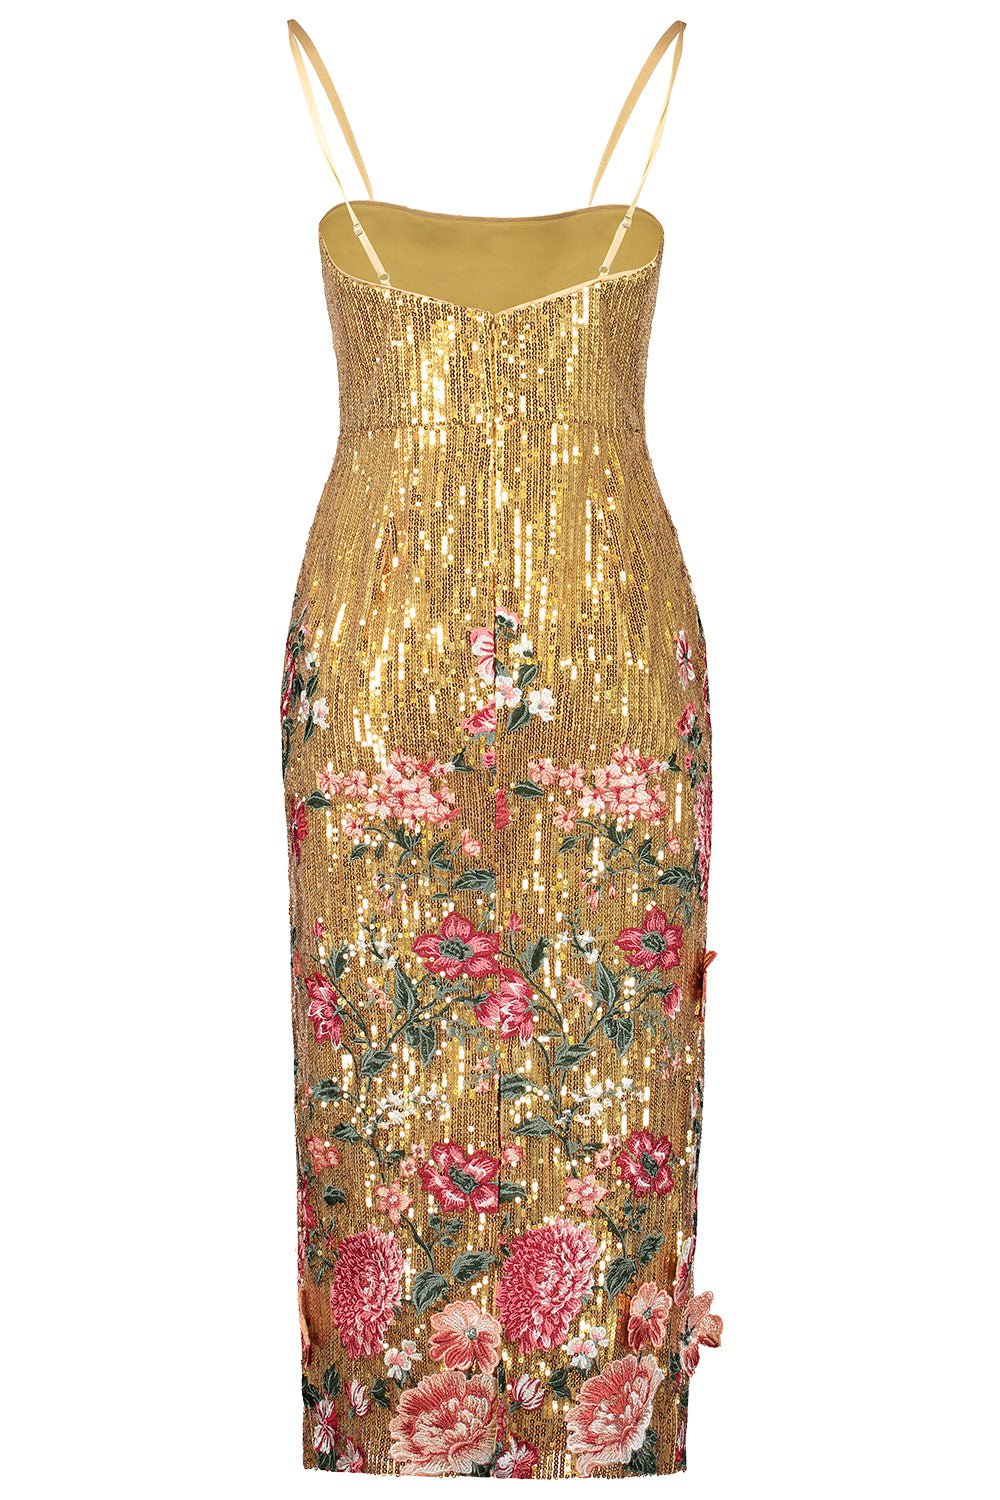 MARCHESA NOTTE-Embroidered Applique Sequin Dress-